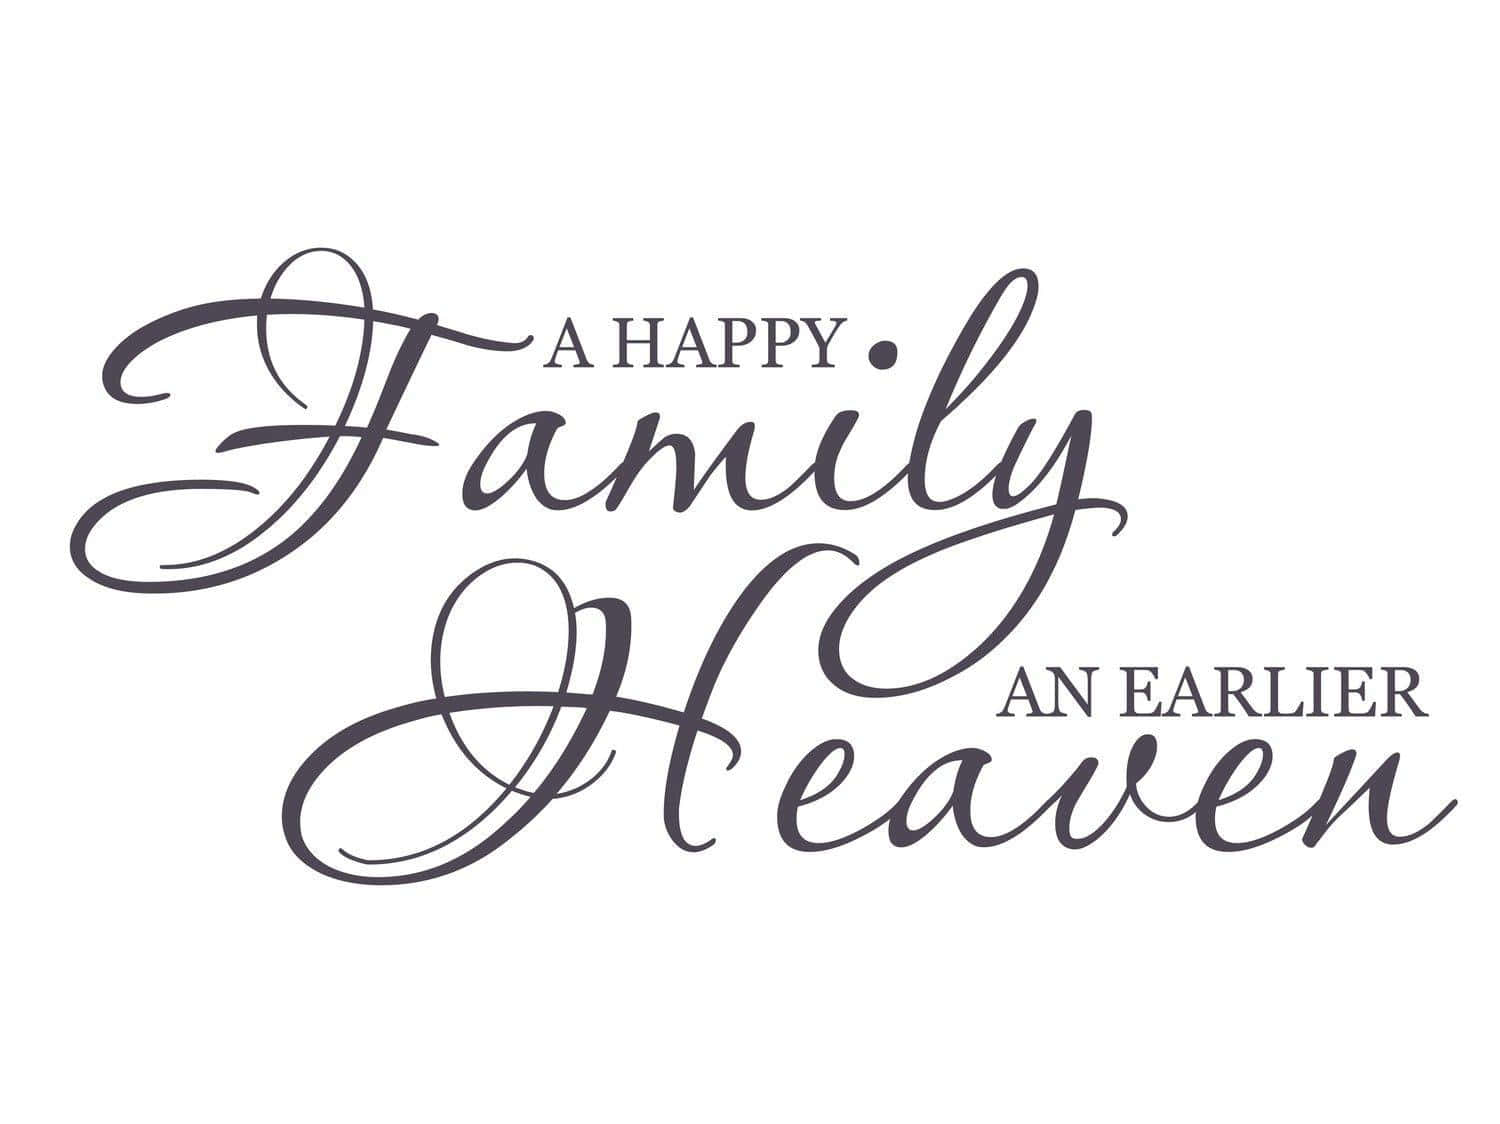 Happy Family Earlier Heaven Quote Wallpaper